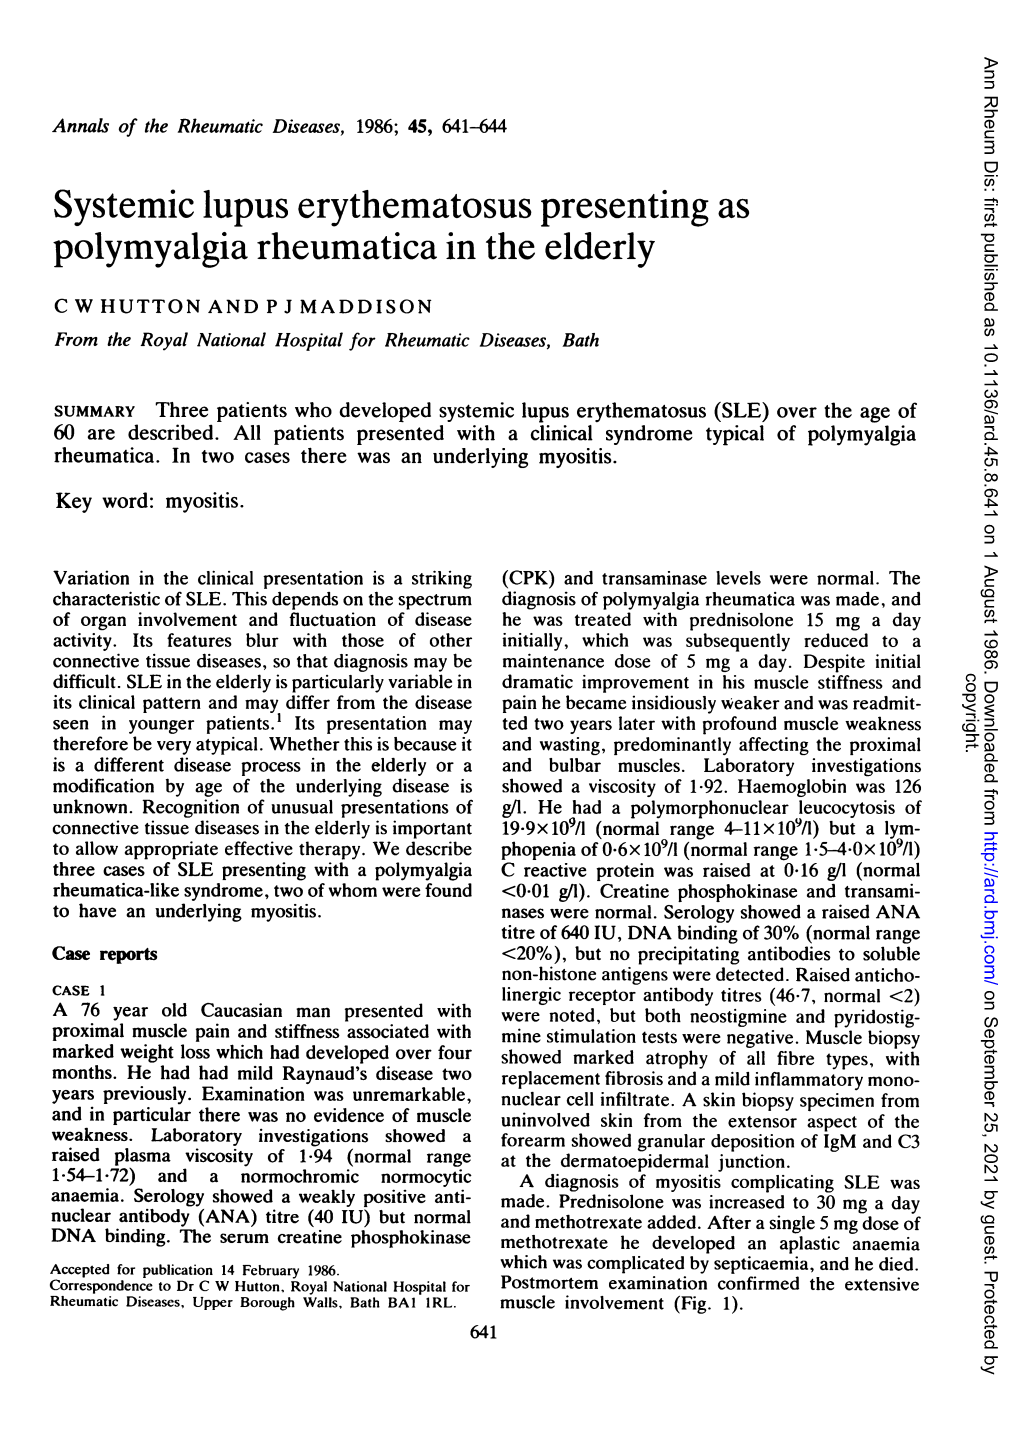 Systemic Lupus Erythematosus Presenting As Polymyalgia Rheumatica in the Elderly